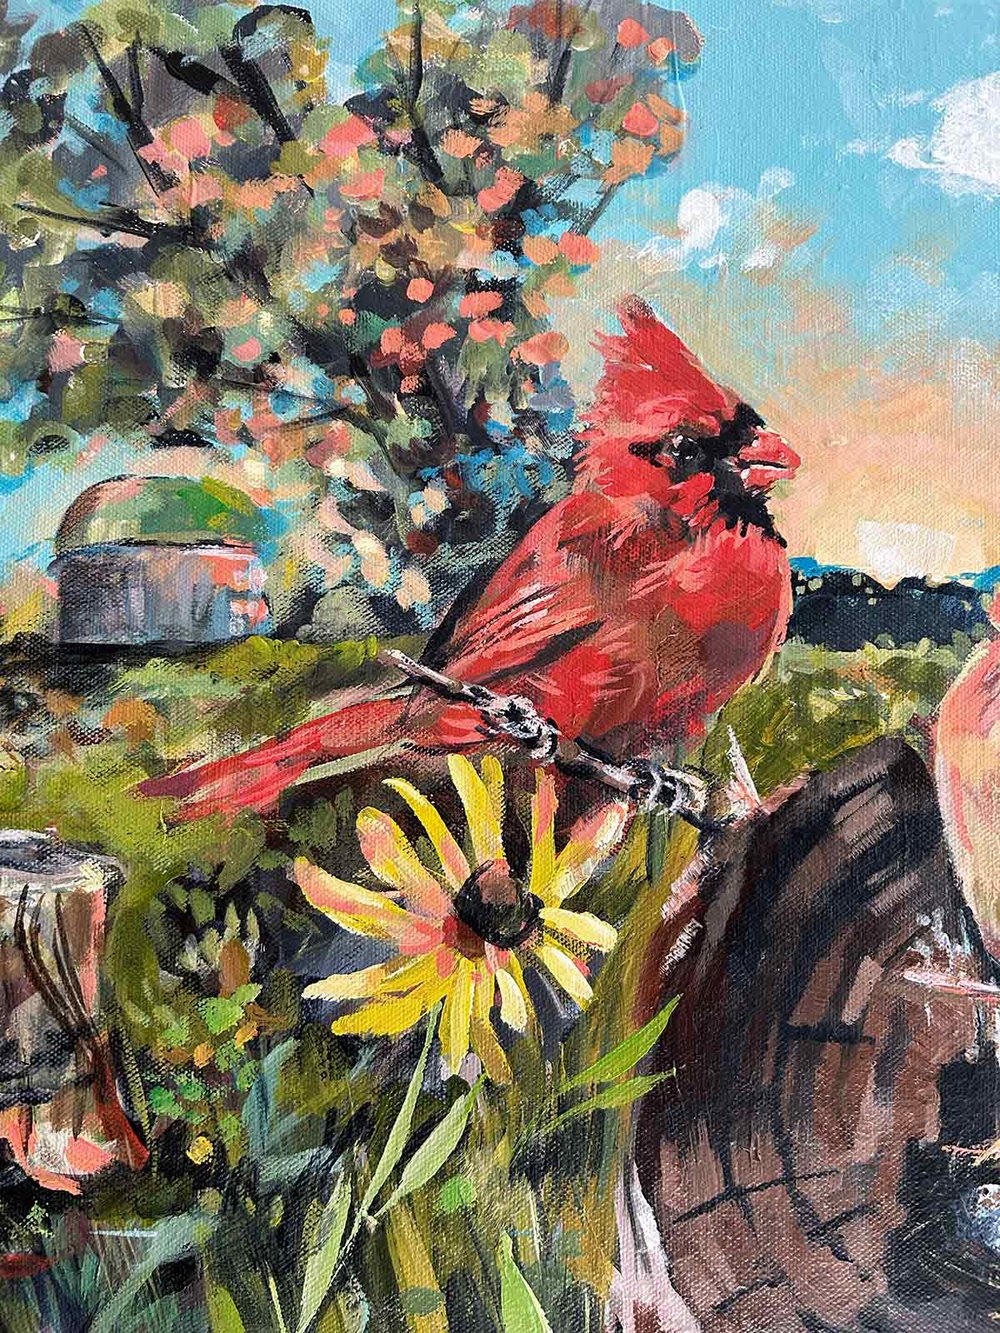 Waiting – Northern Cardinal Painting